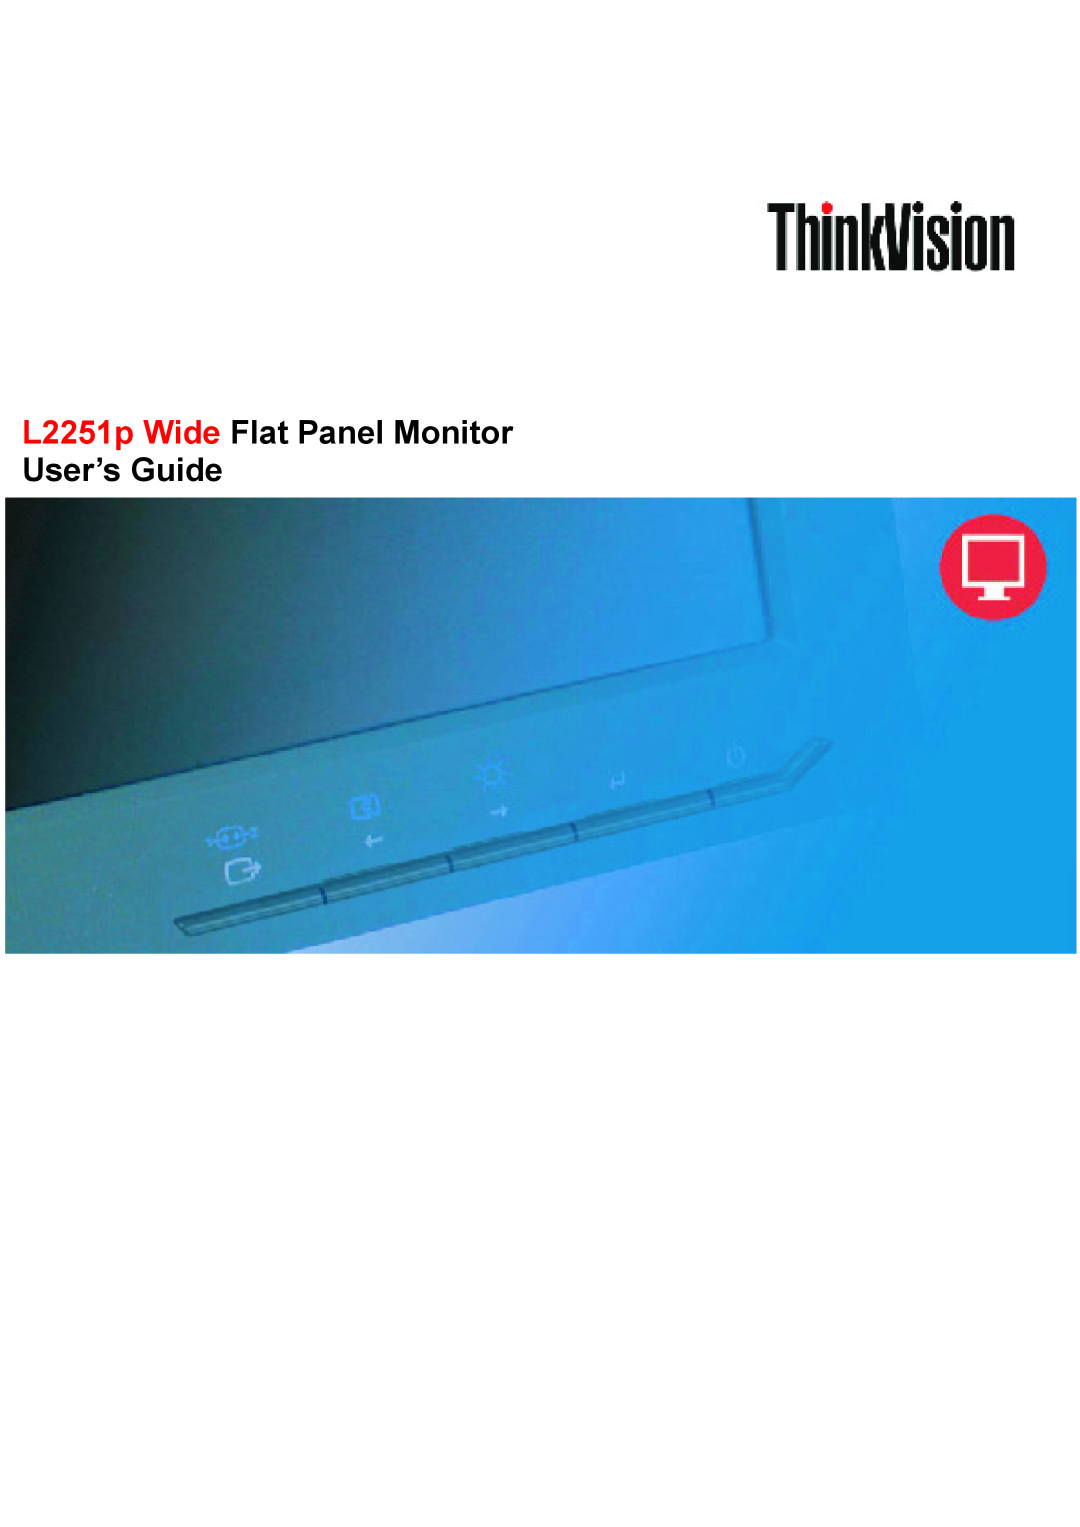 Lenovo manual L2251p Wide Flat Panel Monitor User’s Guide 